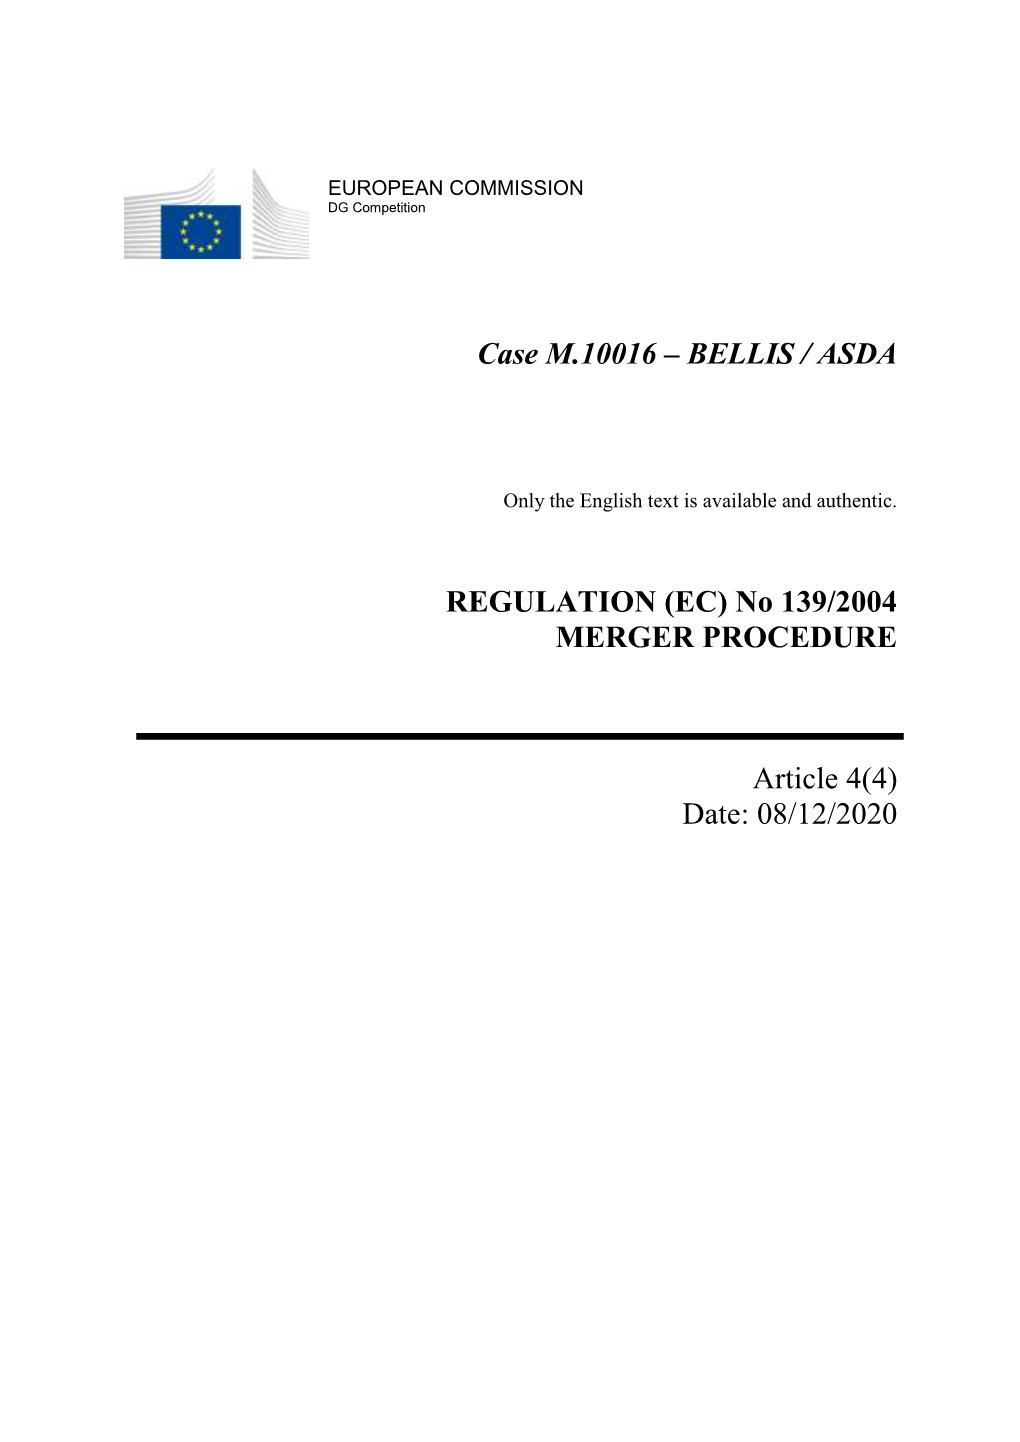 Case M.10016 – BELLIS / ASDA REGULATION (EC) No 139/2004 MERGER PROCEDURE Article 4(4) Date: 08/12/2020